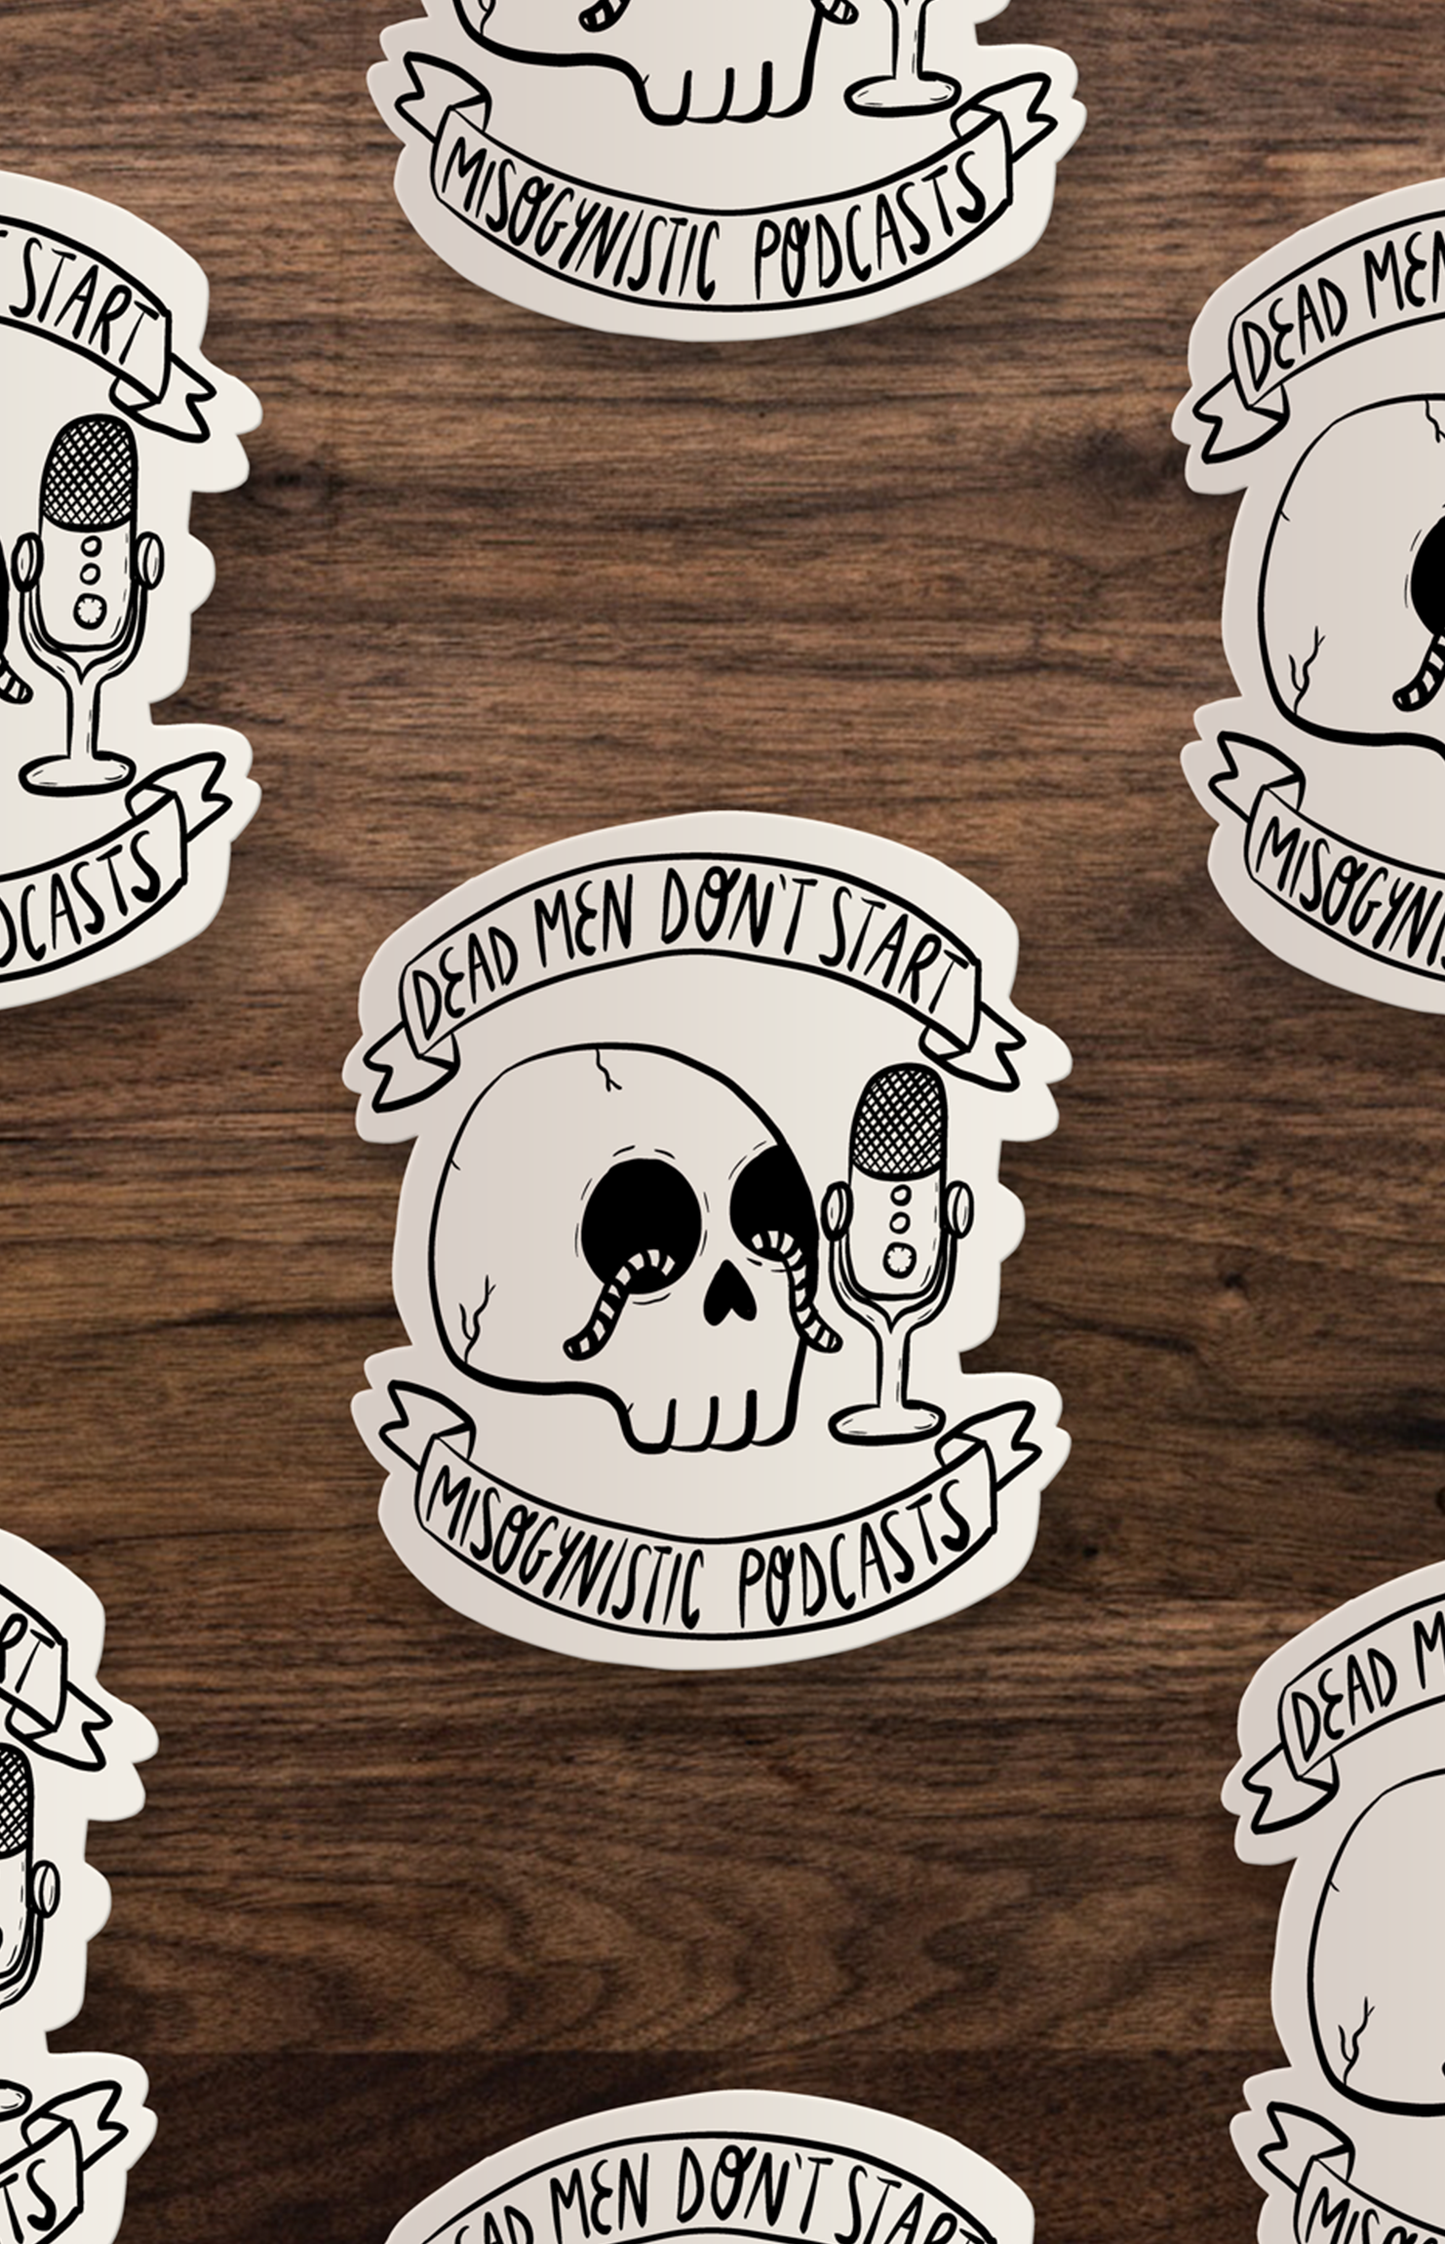 Dead men don't start misogynistic podcasts - sticker
